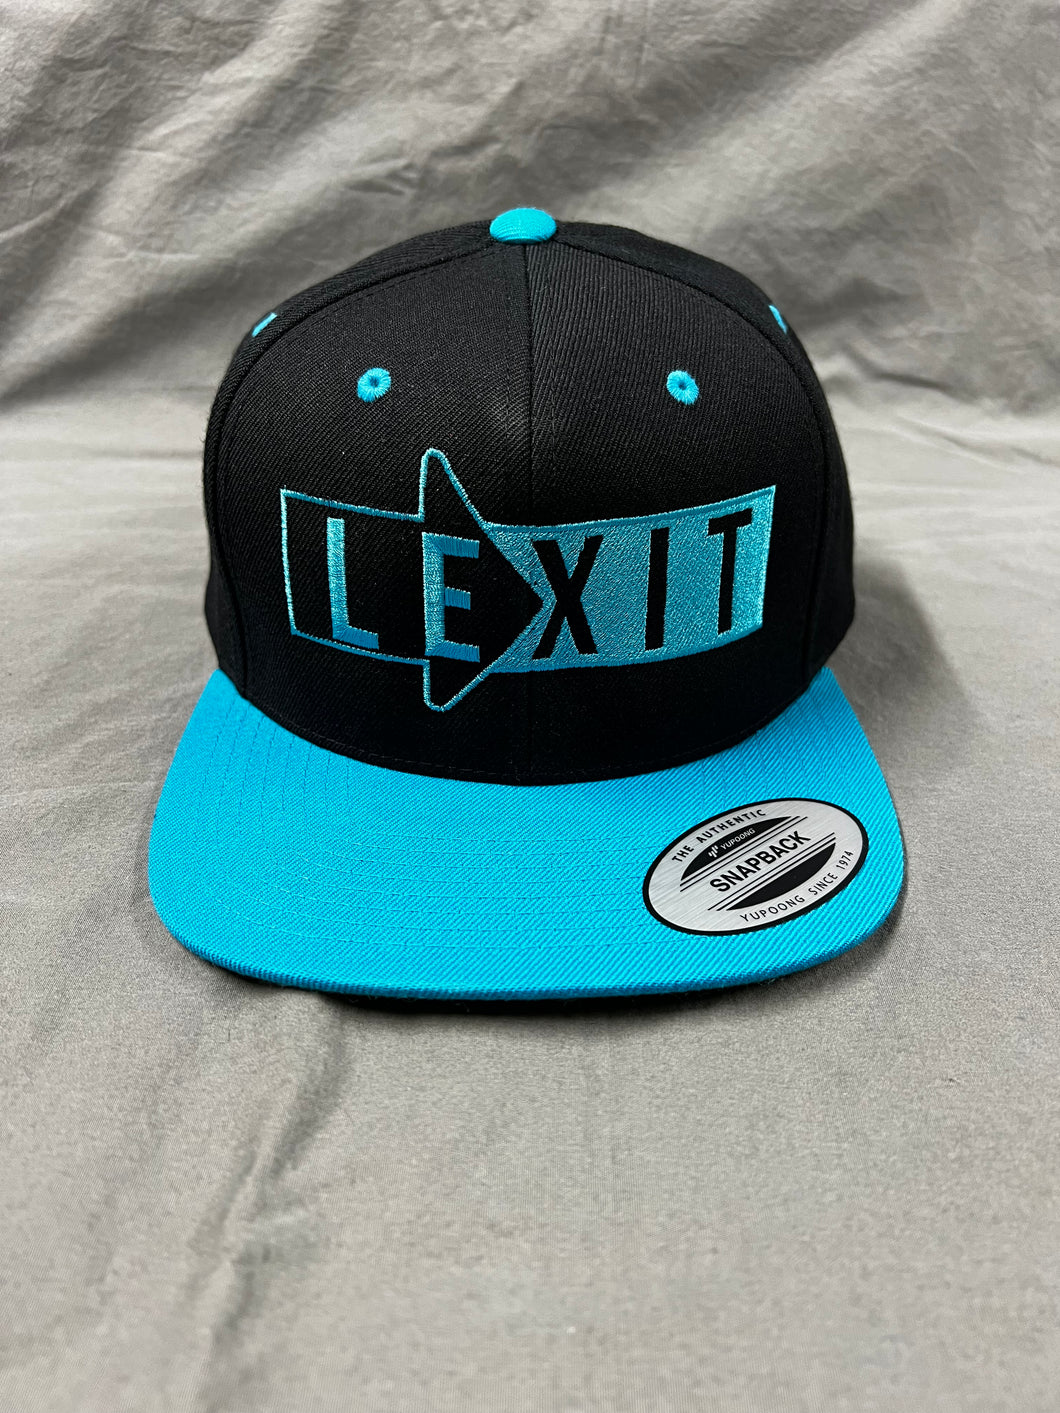 LX-13-05 Black with Teal BILL Lexit Cap